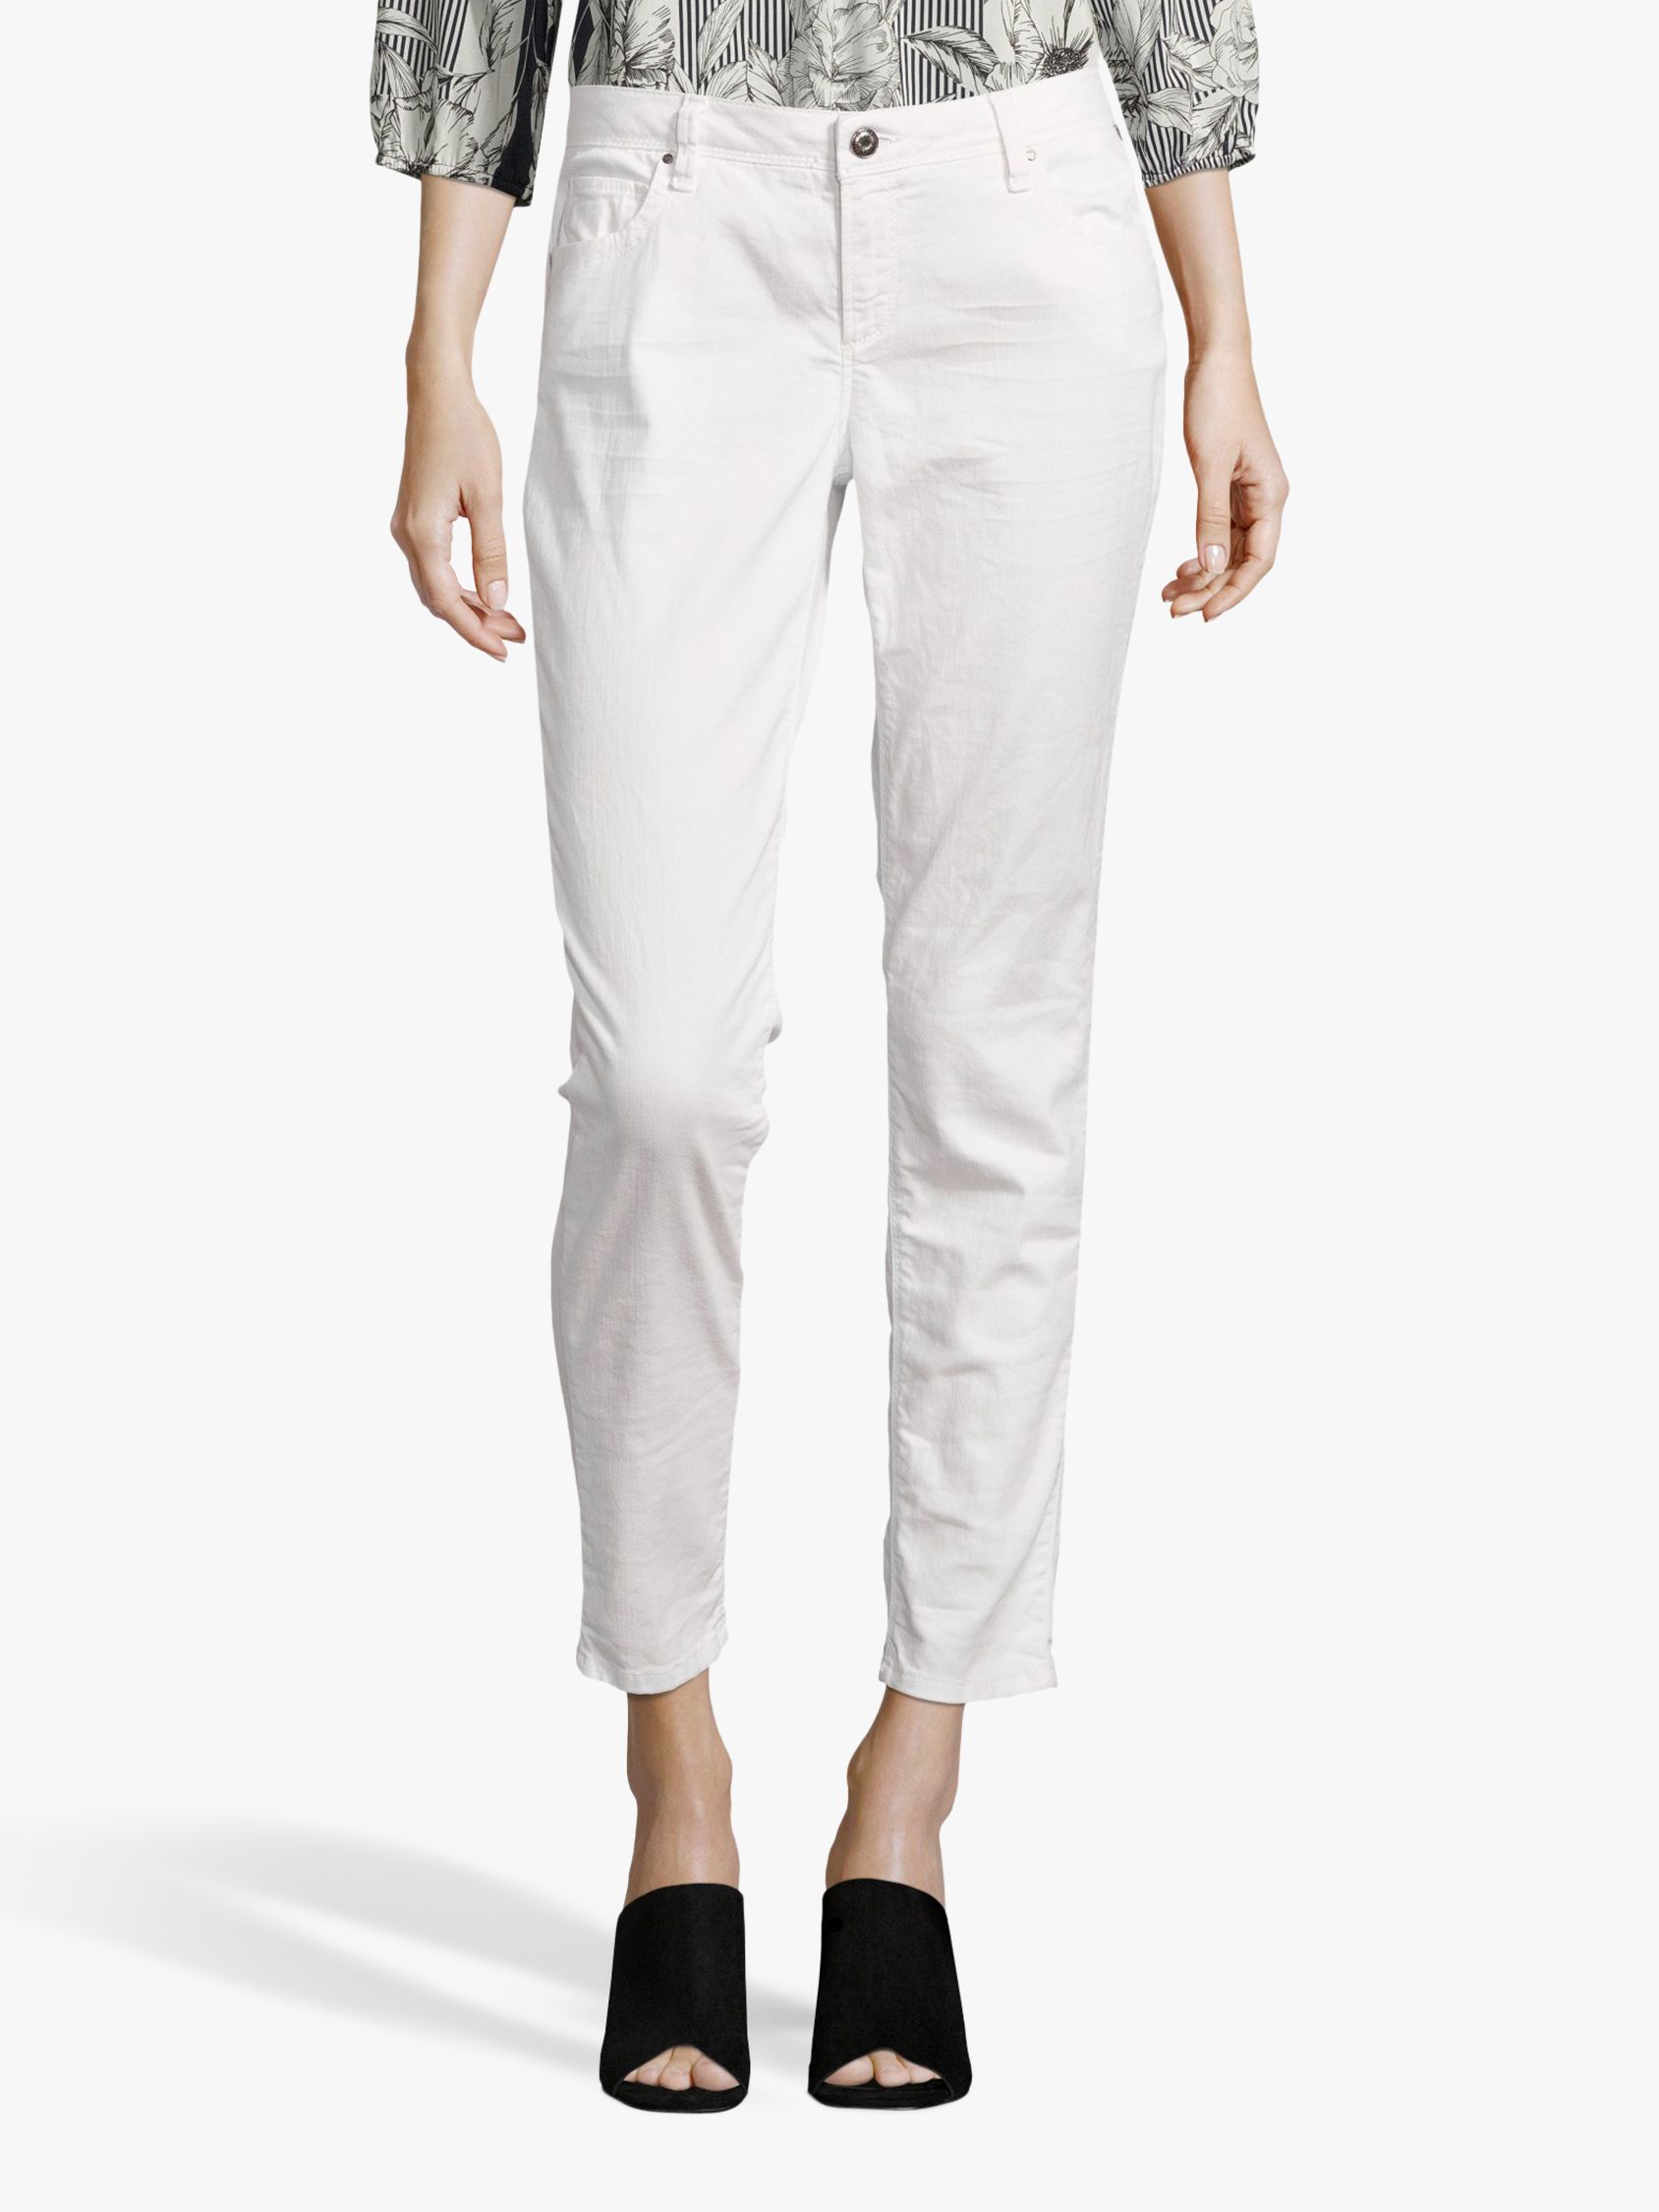 Betty & Co. 5 Pocket Slim Jeans, Bright White